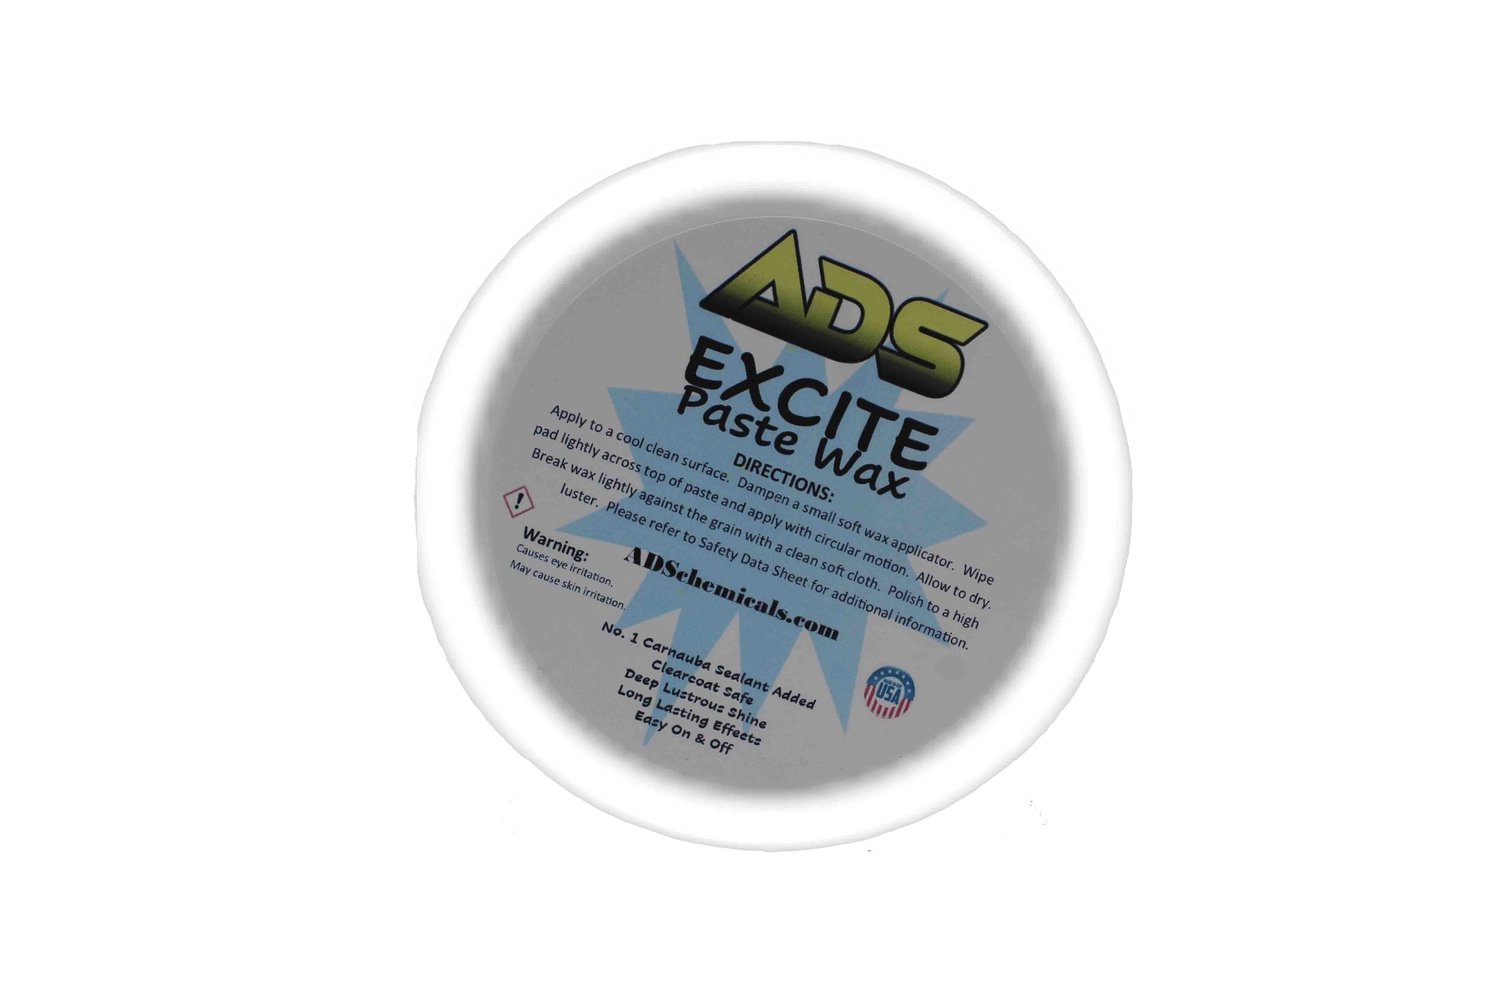 Excite Paste Wax — ADS Auto Detail Supplies - ADS Chemicals